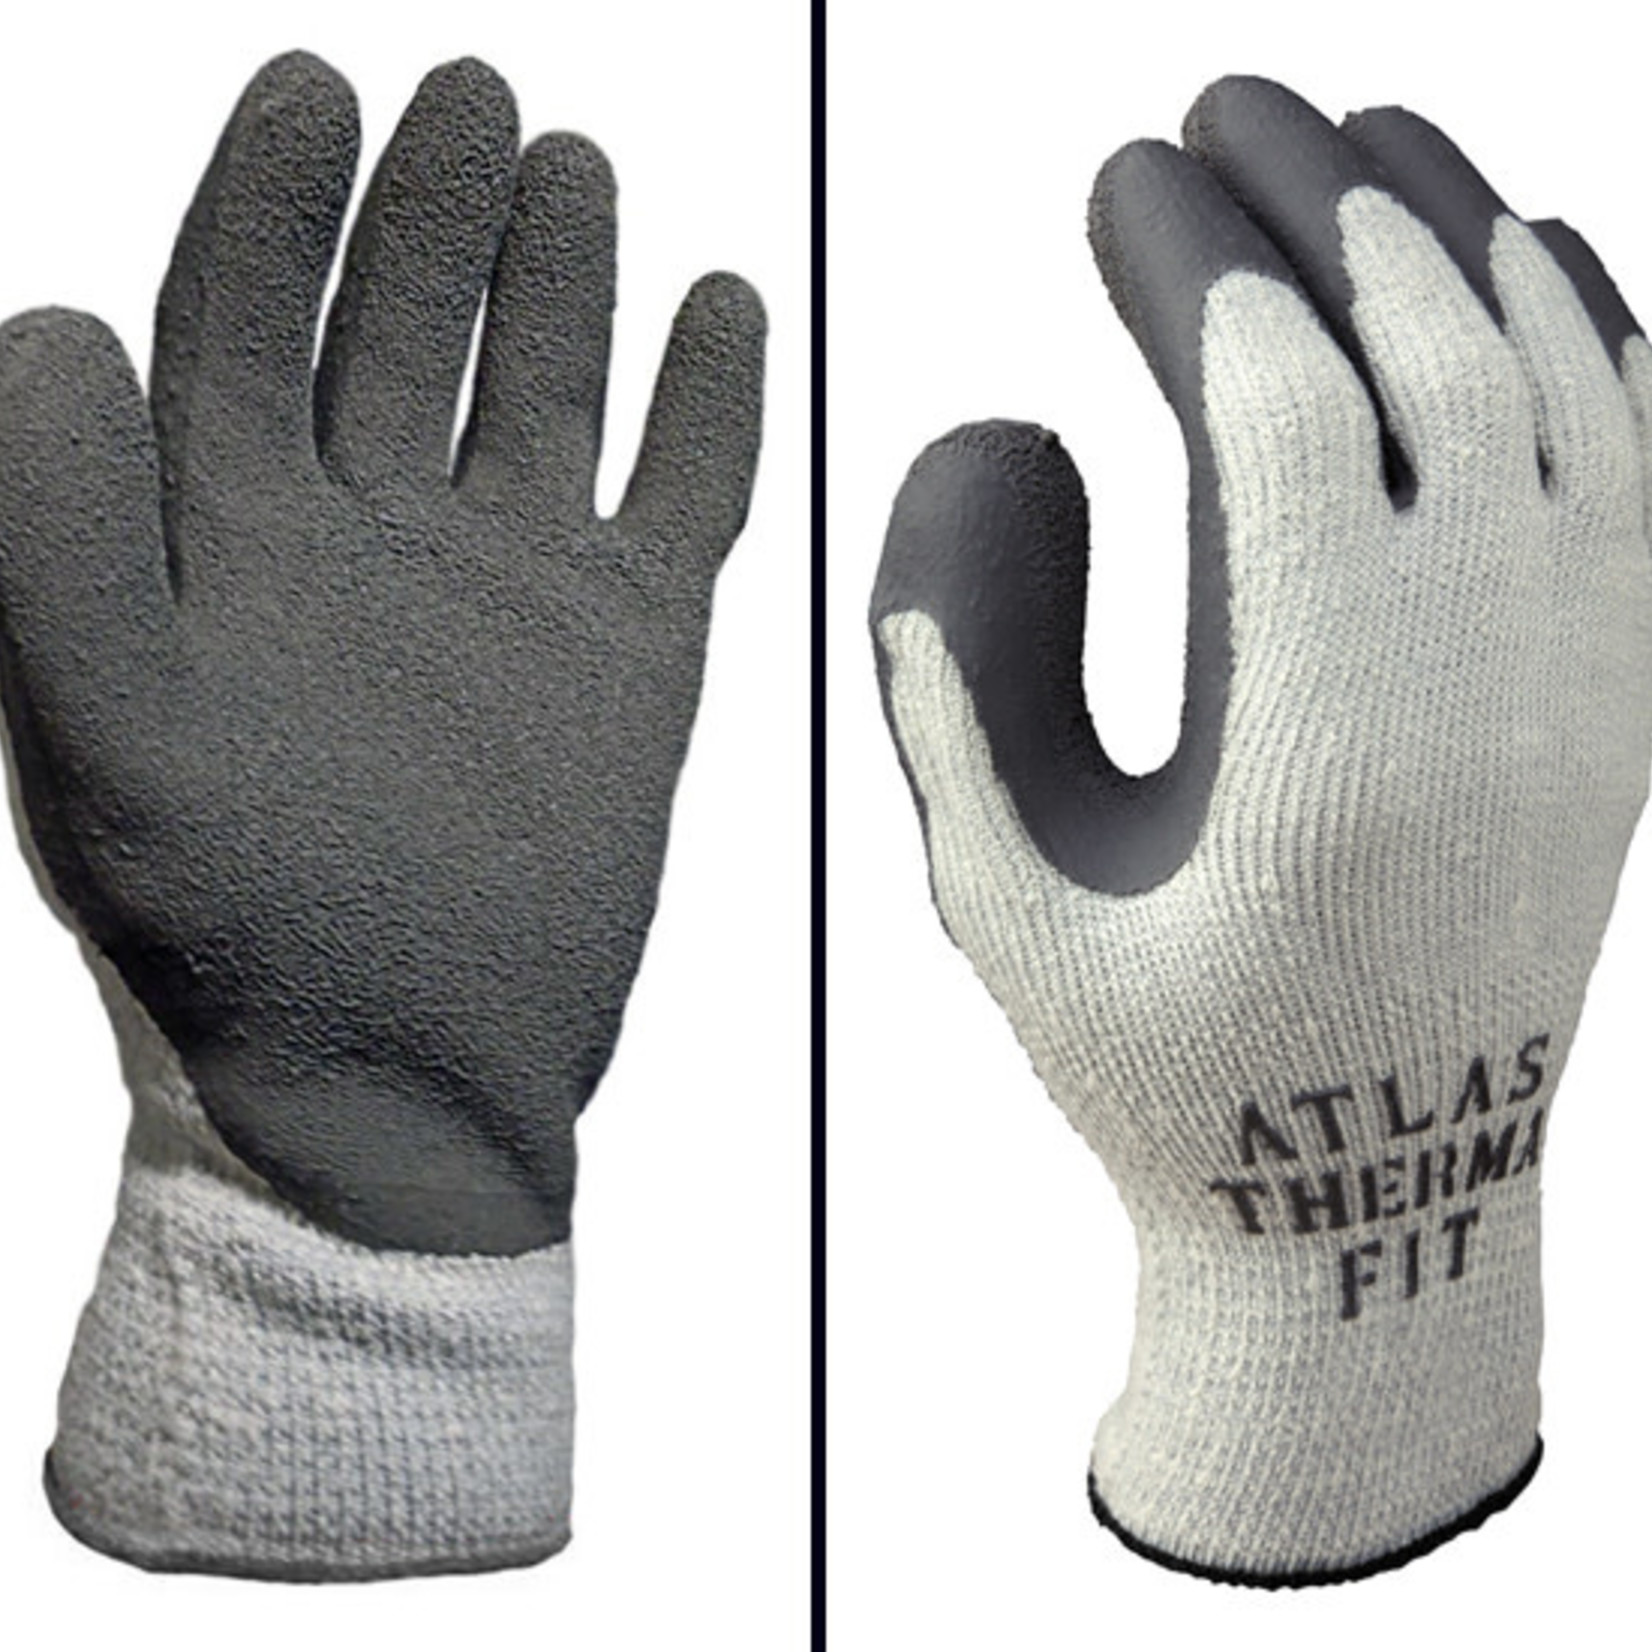 Atlas Gloves Atlas Glove 451 Thermal Gray Palm Dz